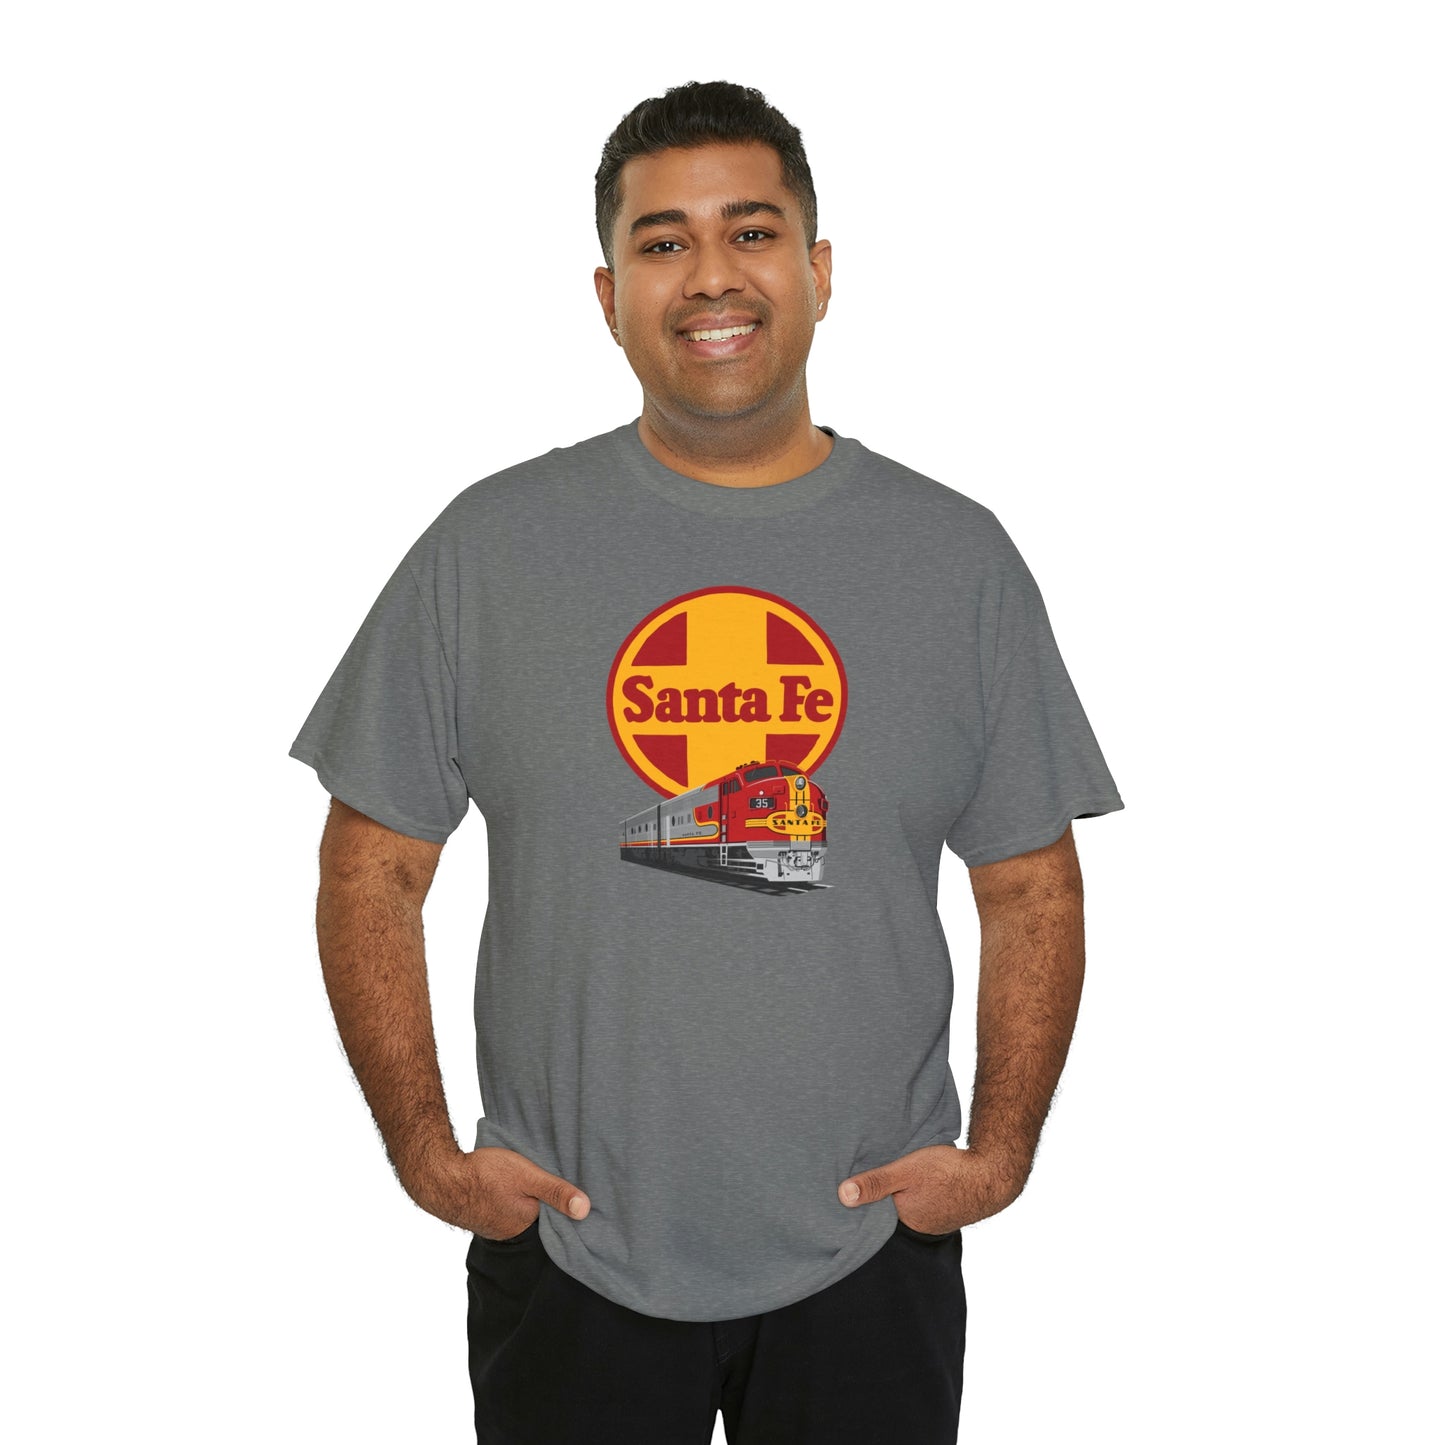 Santa Fe Railroad T-Shirt